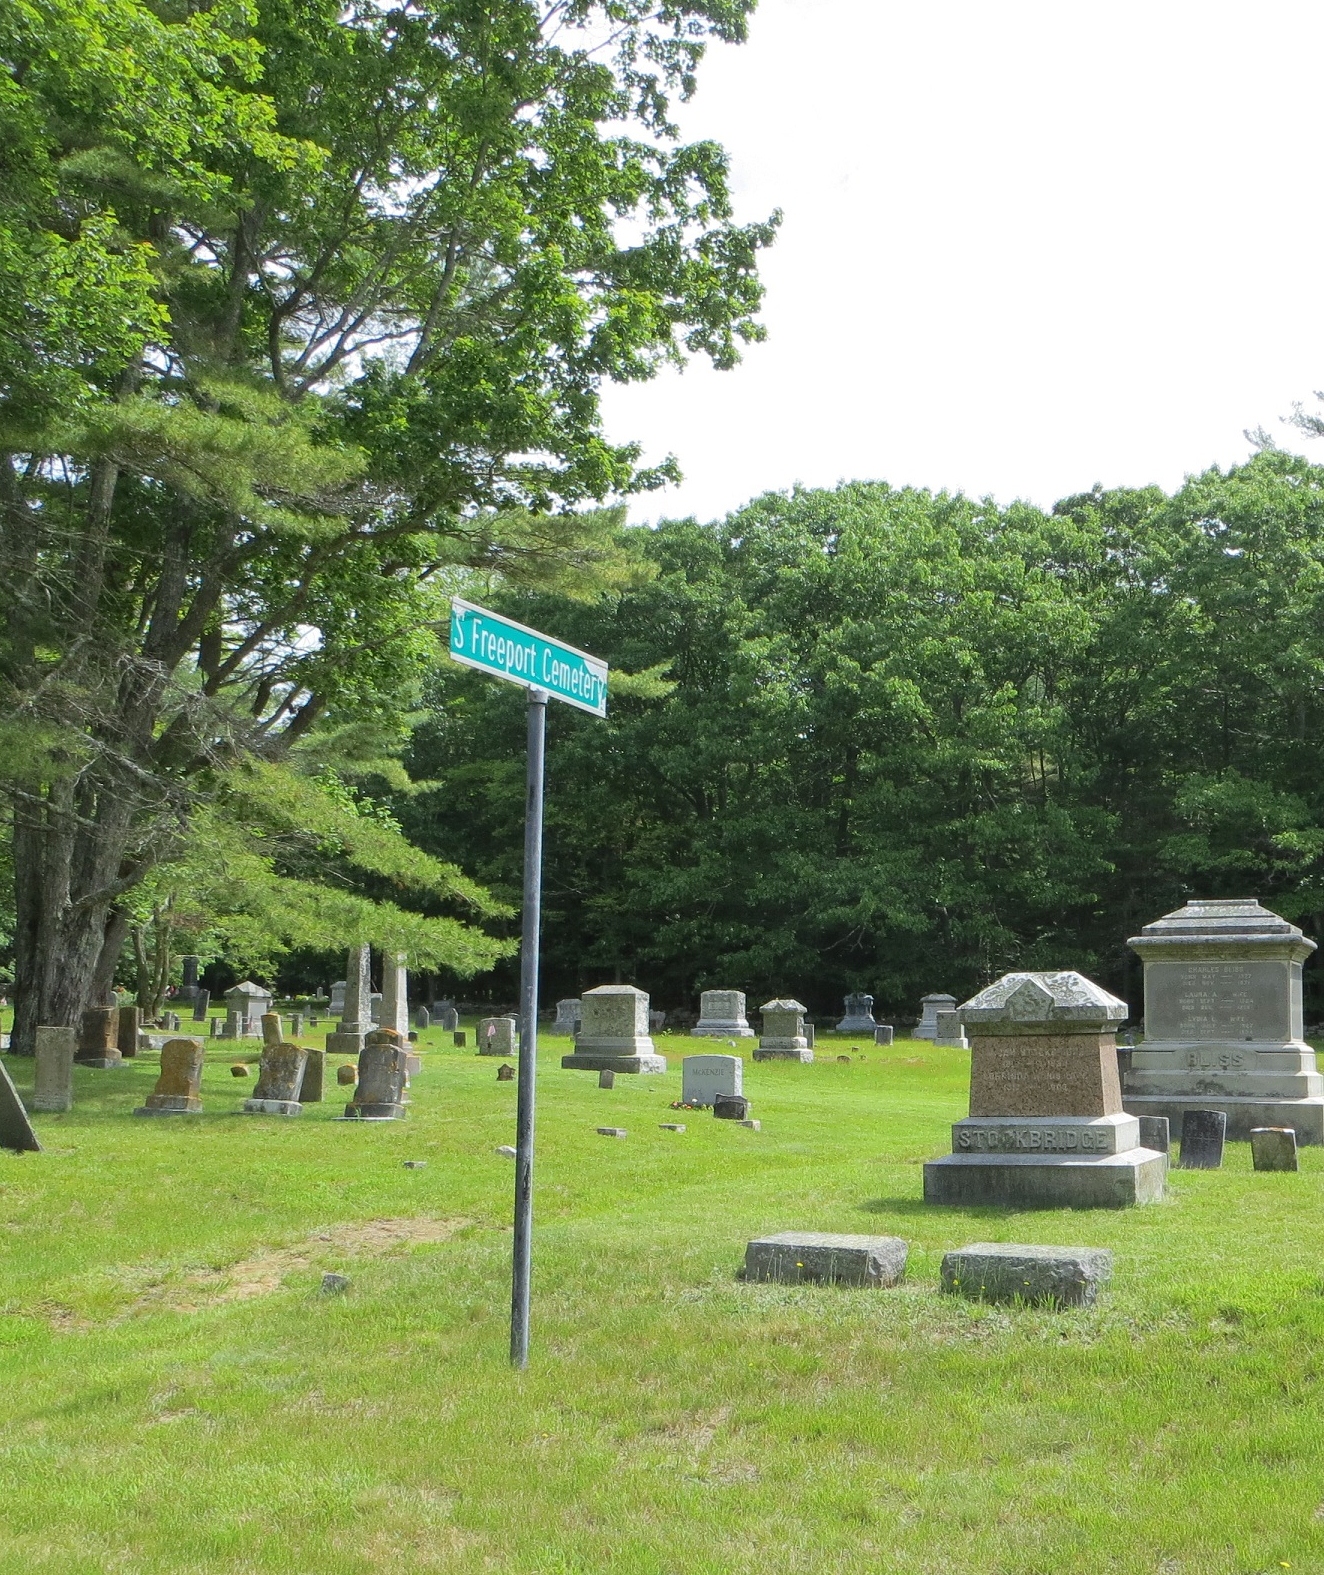 South Freeport Cemetery